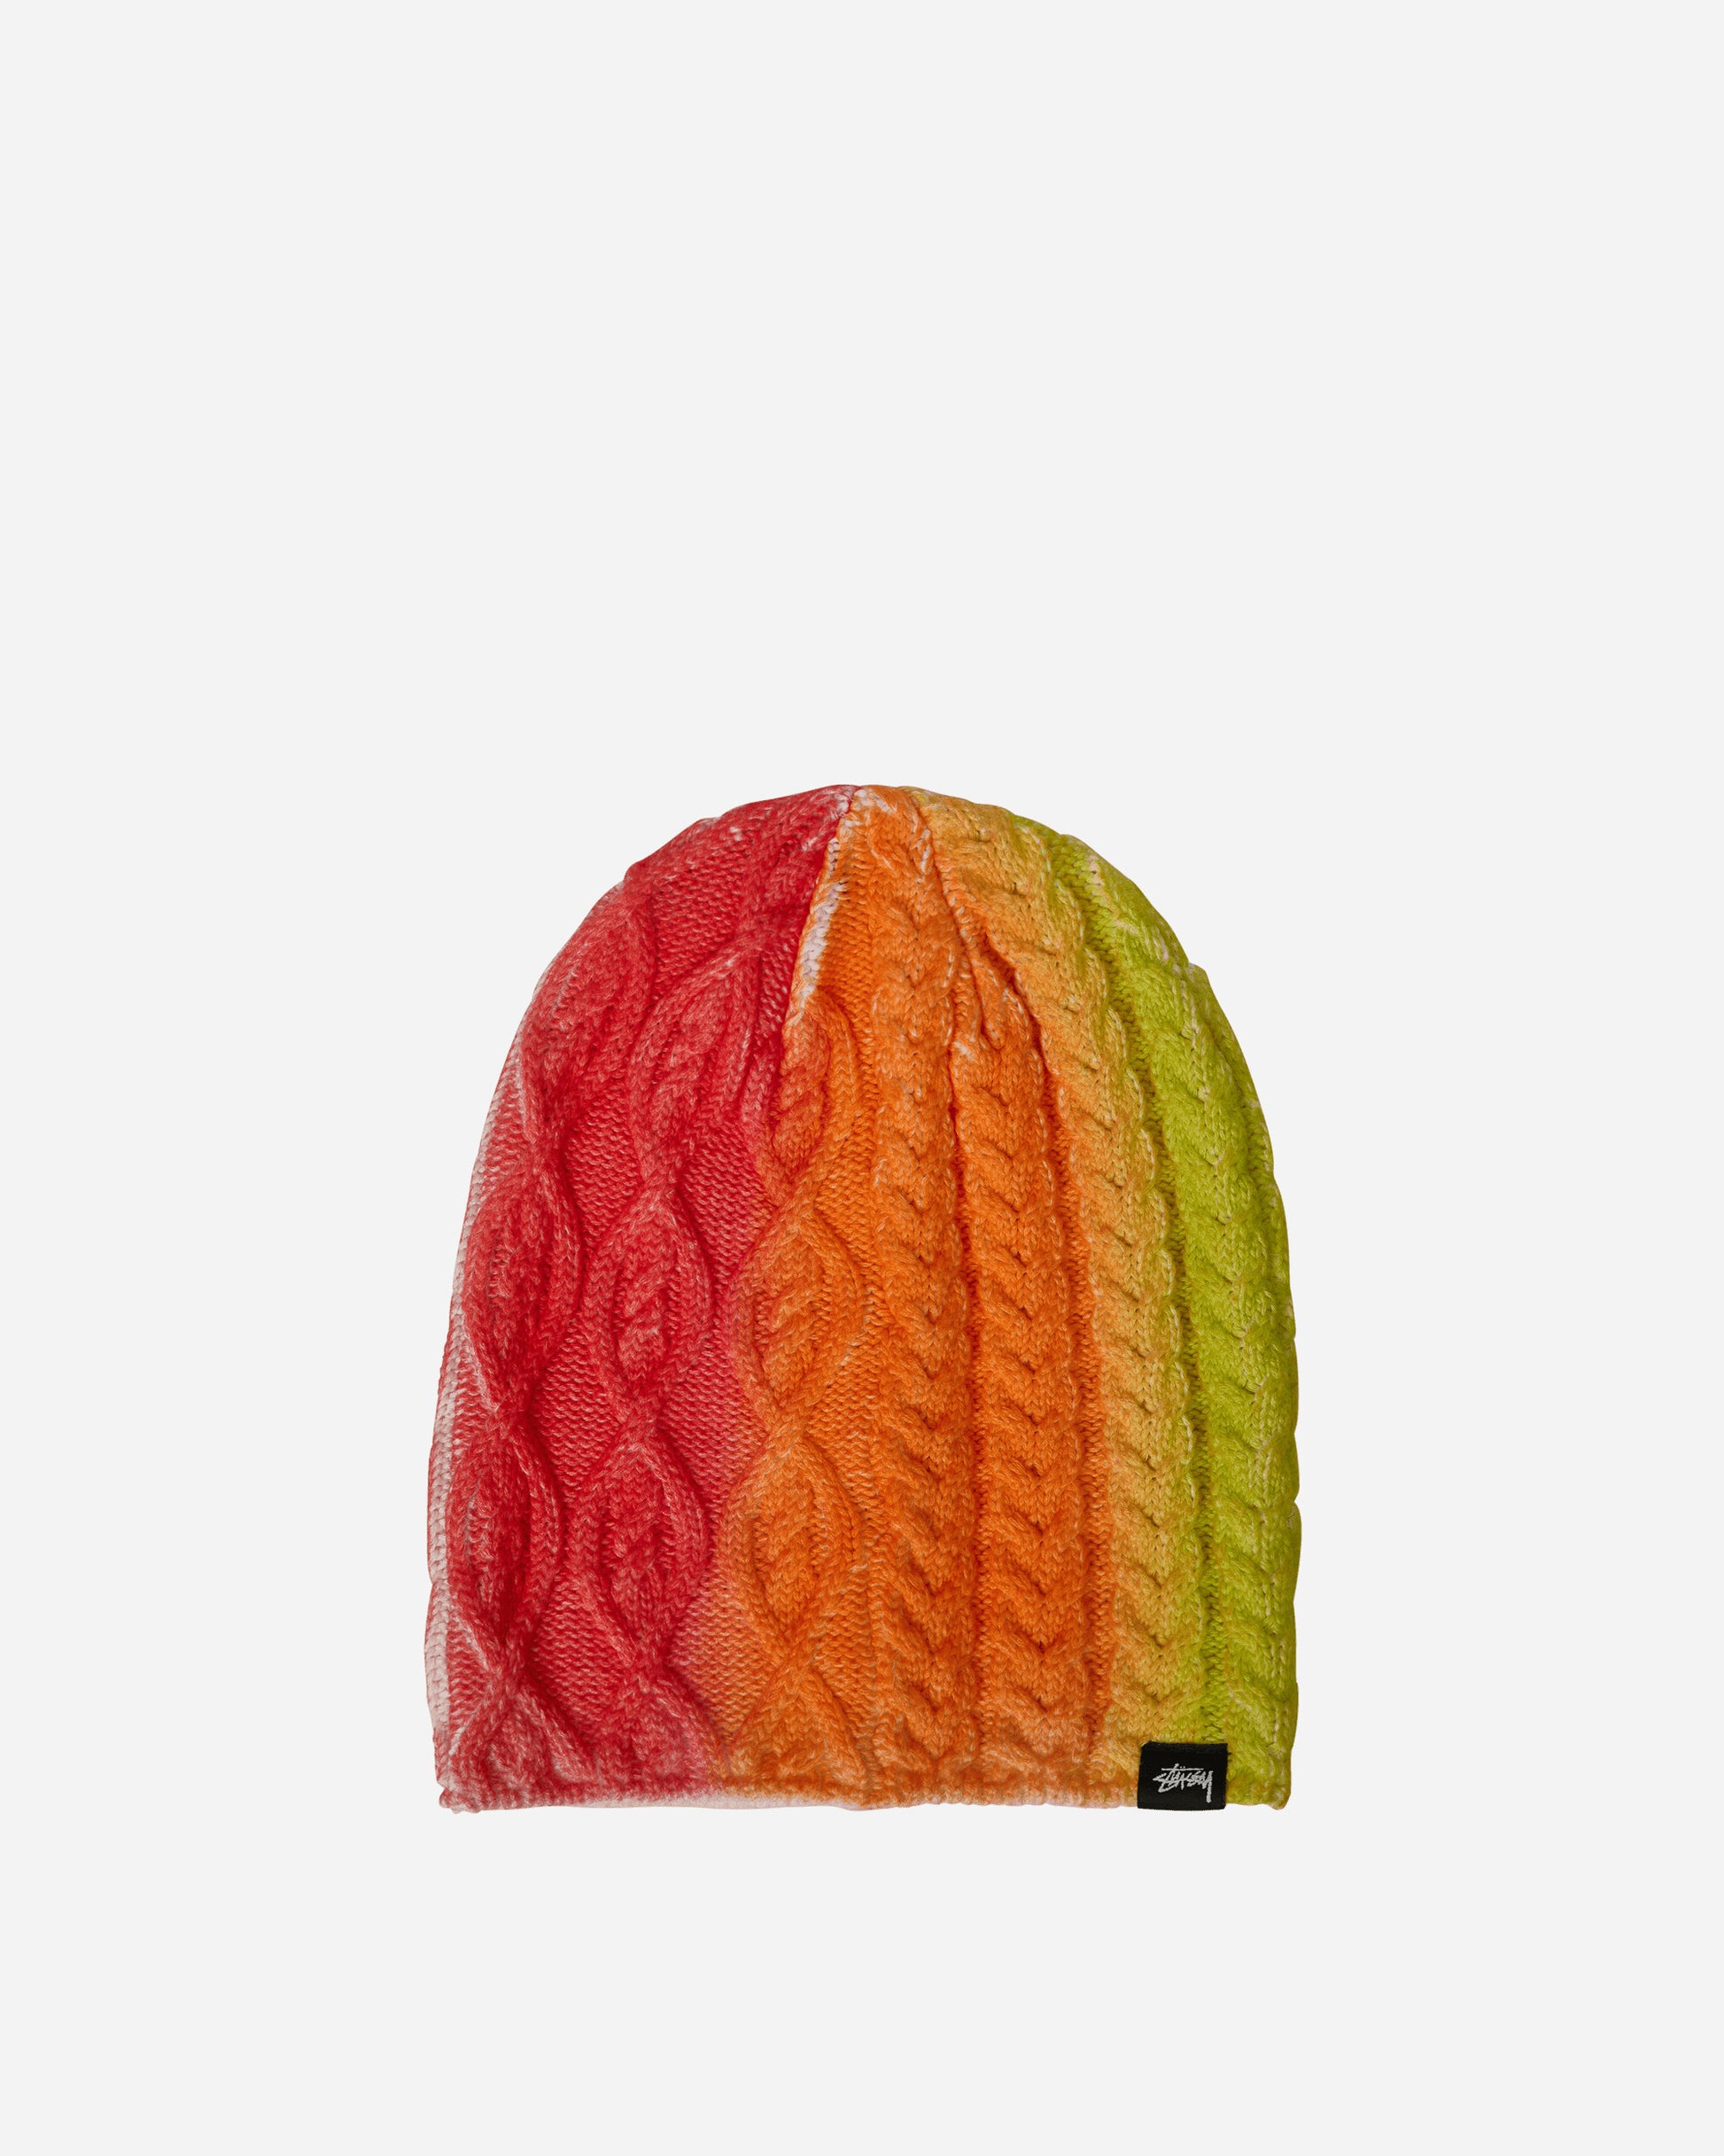 Stüssy Spray Multi Knit Beanie Orange Multi Hats Beanies 1321203 2530